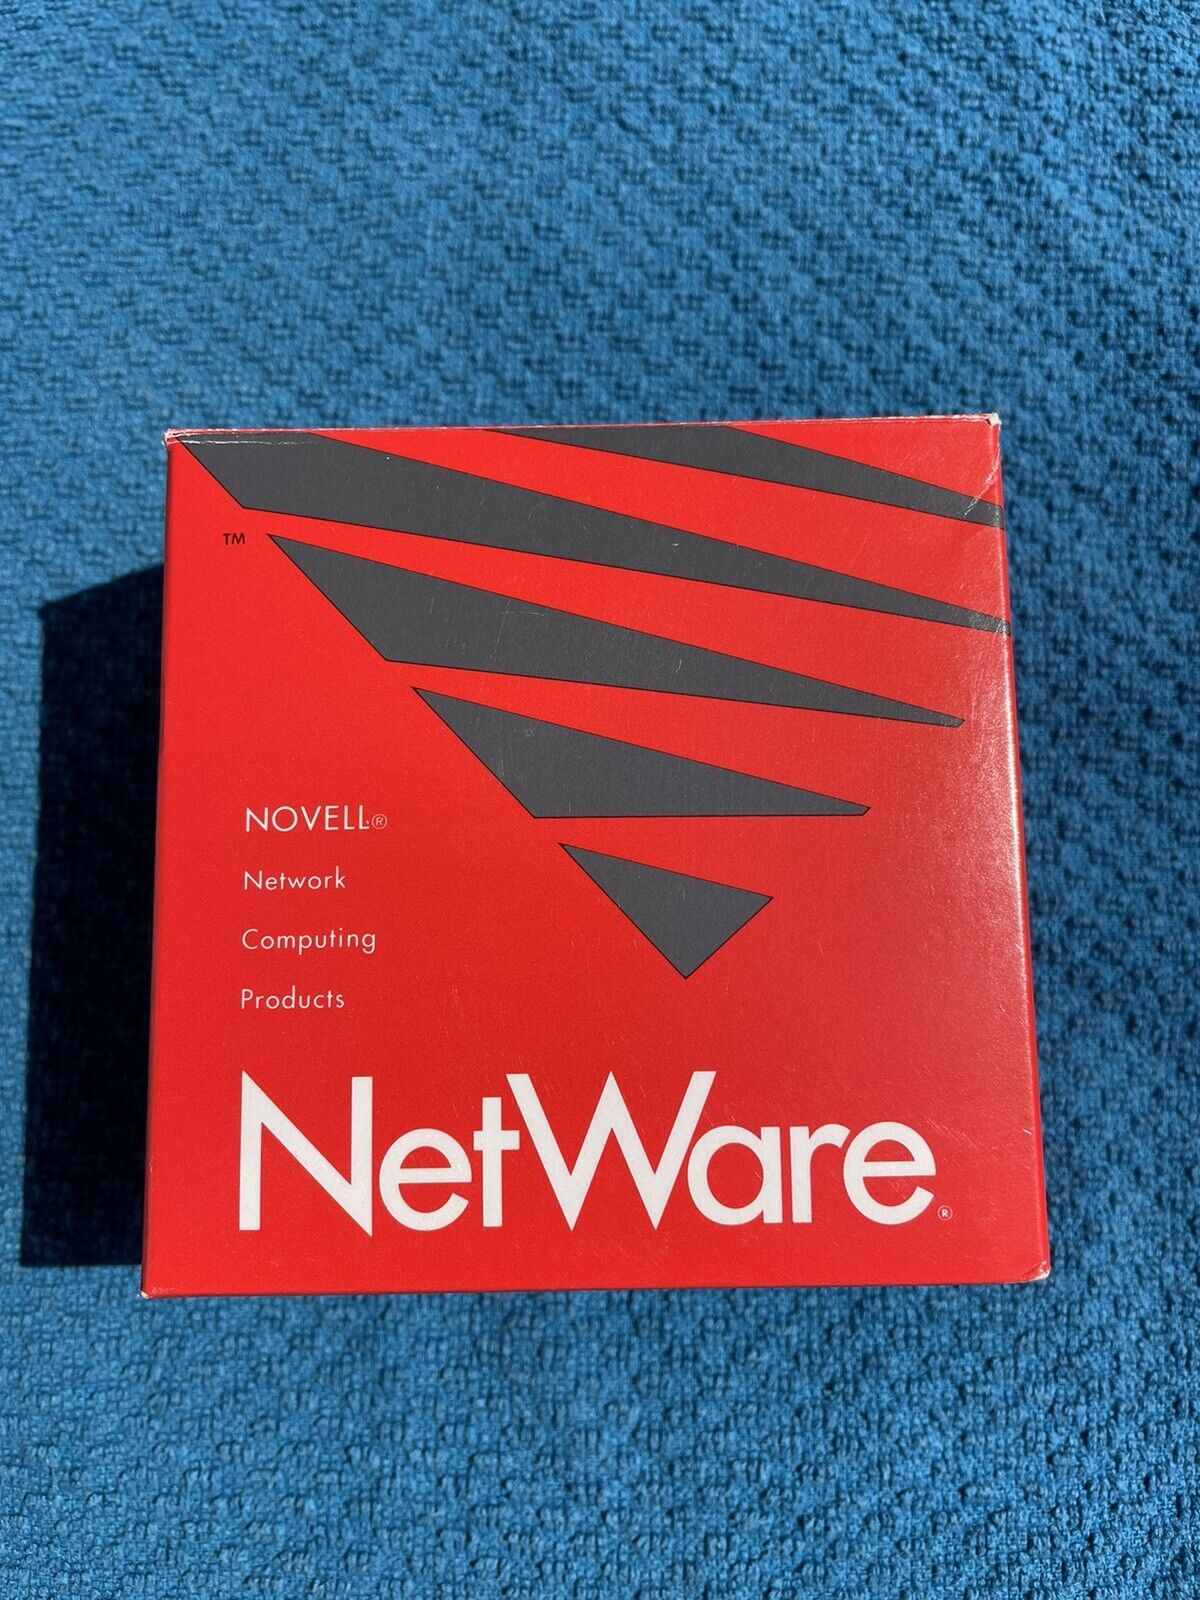 Novell Netware Version 3.11 Disk In Box 3.5 Inch Floppy Disk